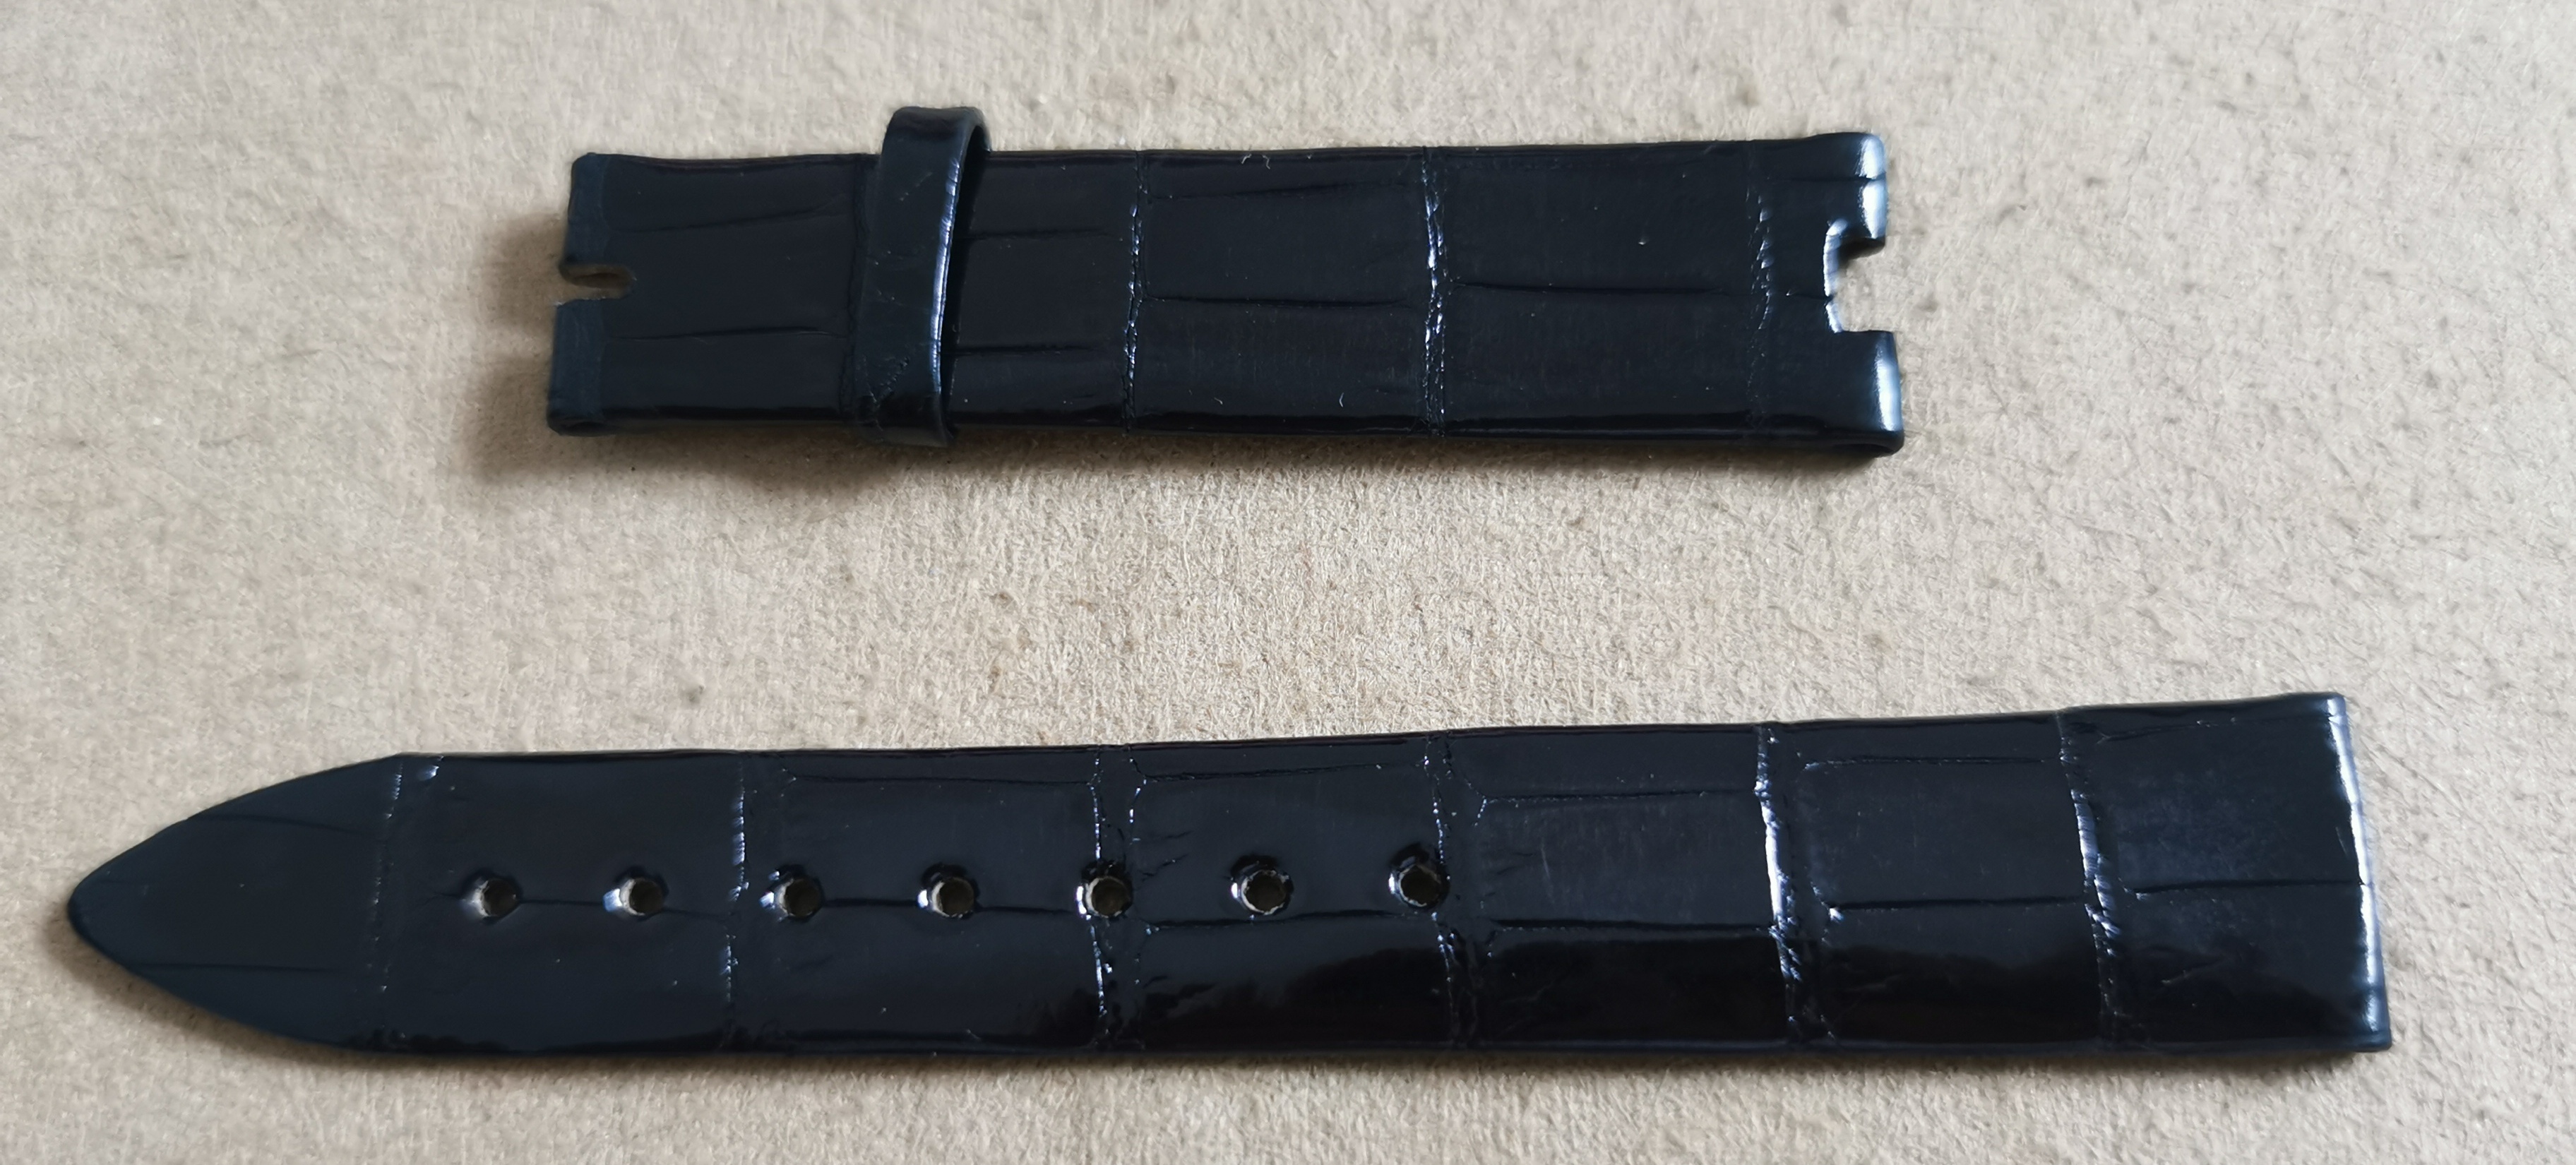 Breguet leather strap croco black for "Reine de Naples" models mm 16 - 14 Newoldstock | San Giorgio a Cremano